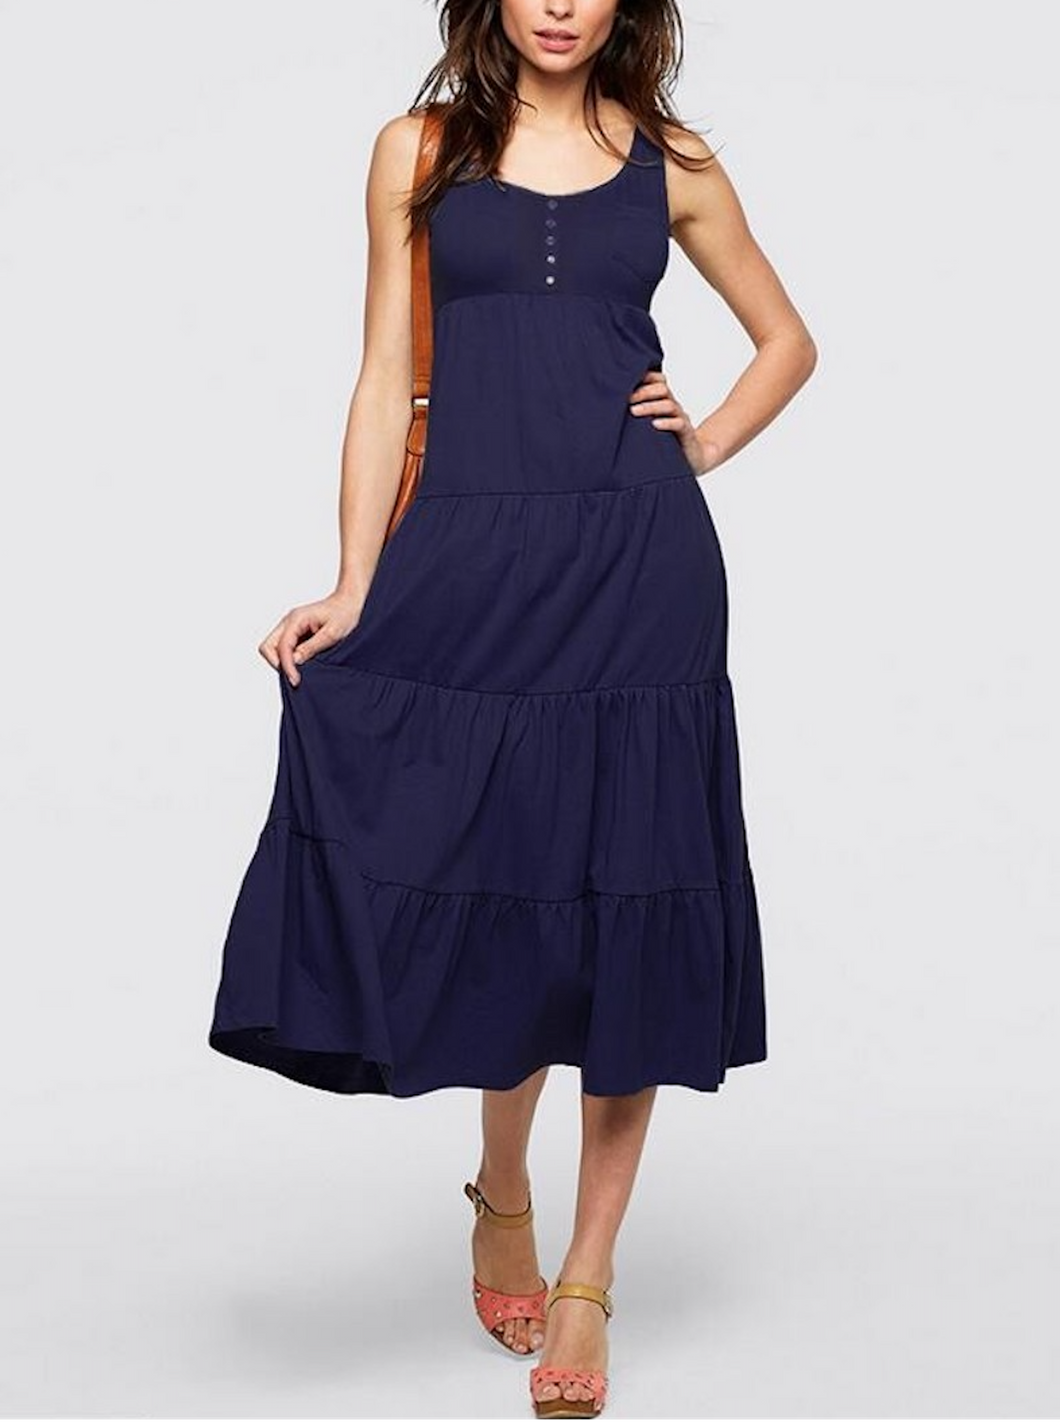 navy blue sleeveless dresses